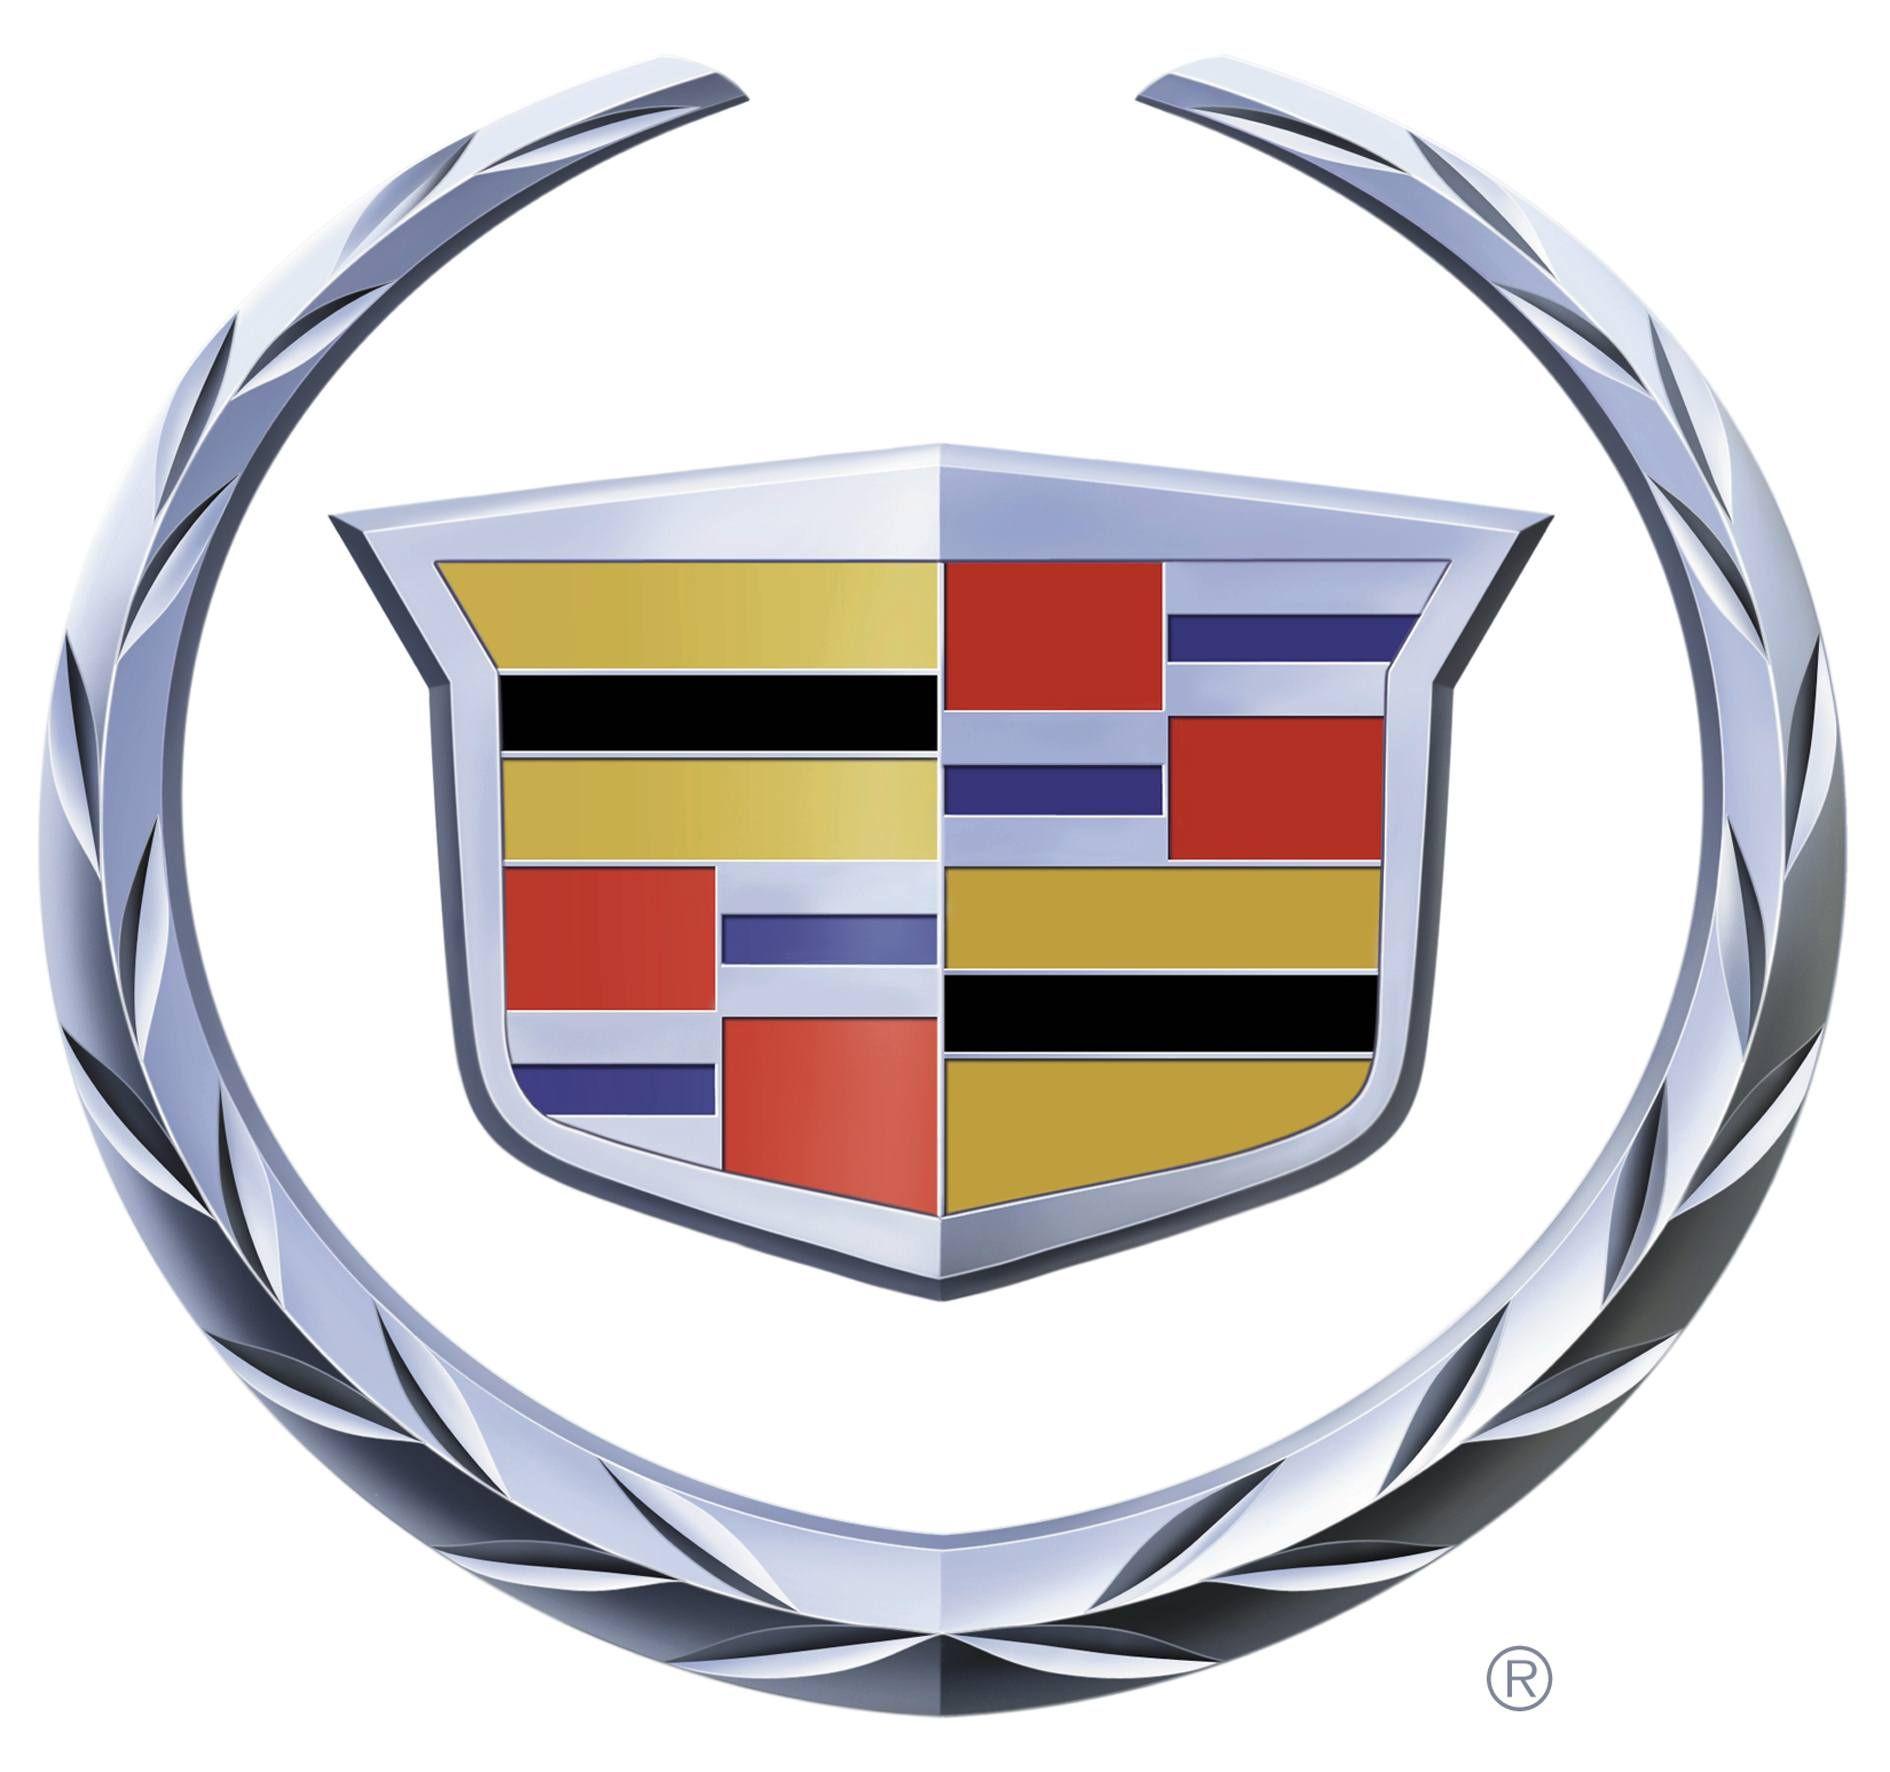 Cadillac Logo - Does the Cadillac logo look sort of like the Maryland flag to any